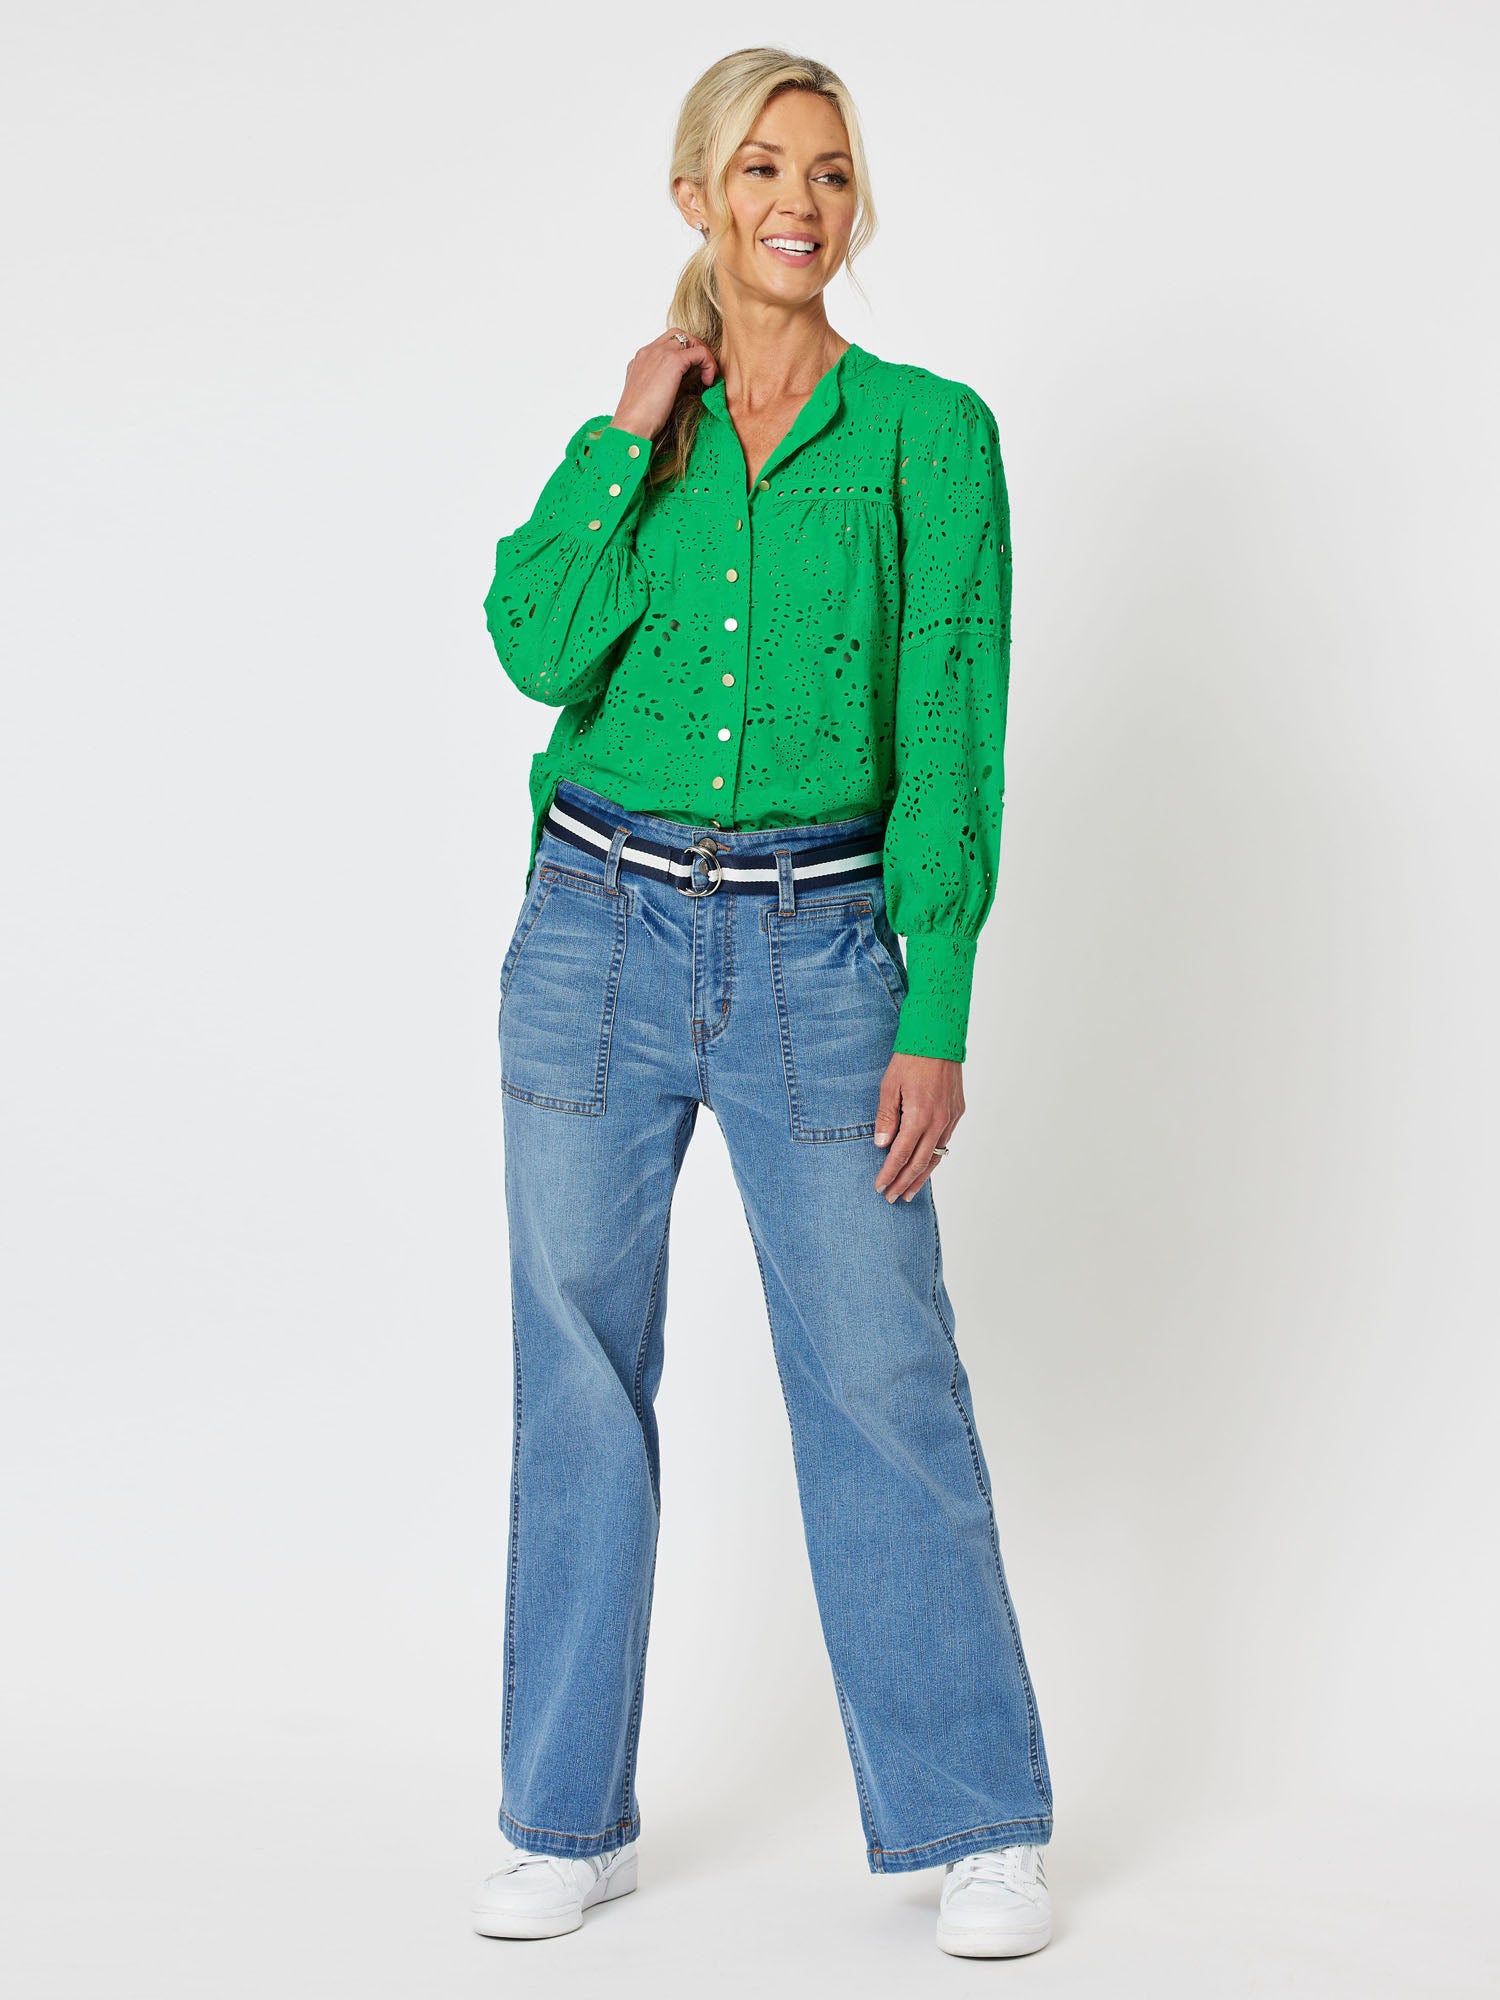 Limani Broderie Cotton Shirt - Emerald